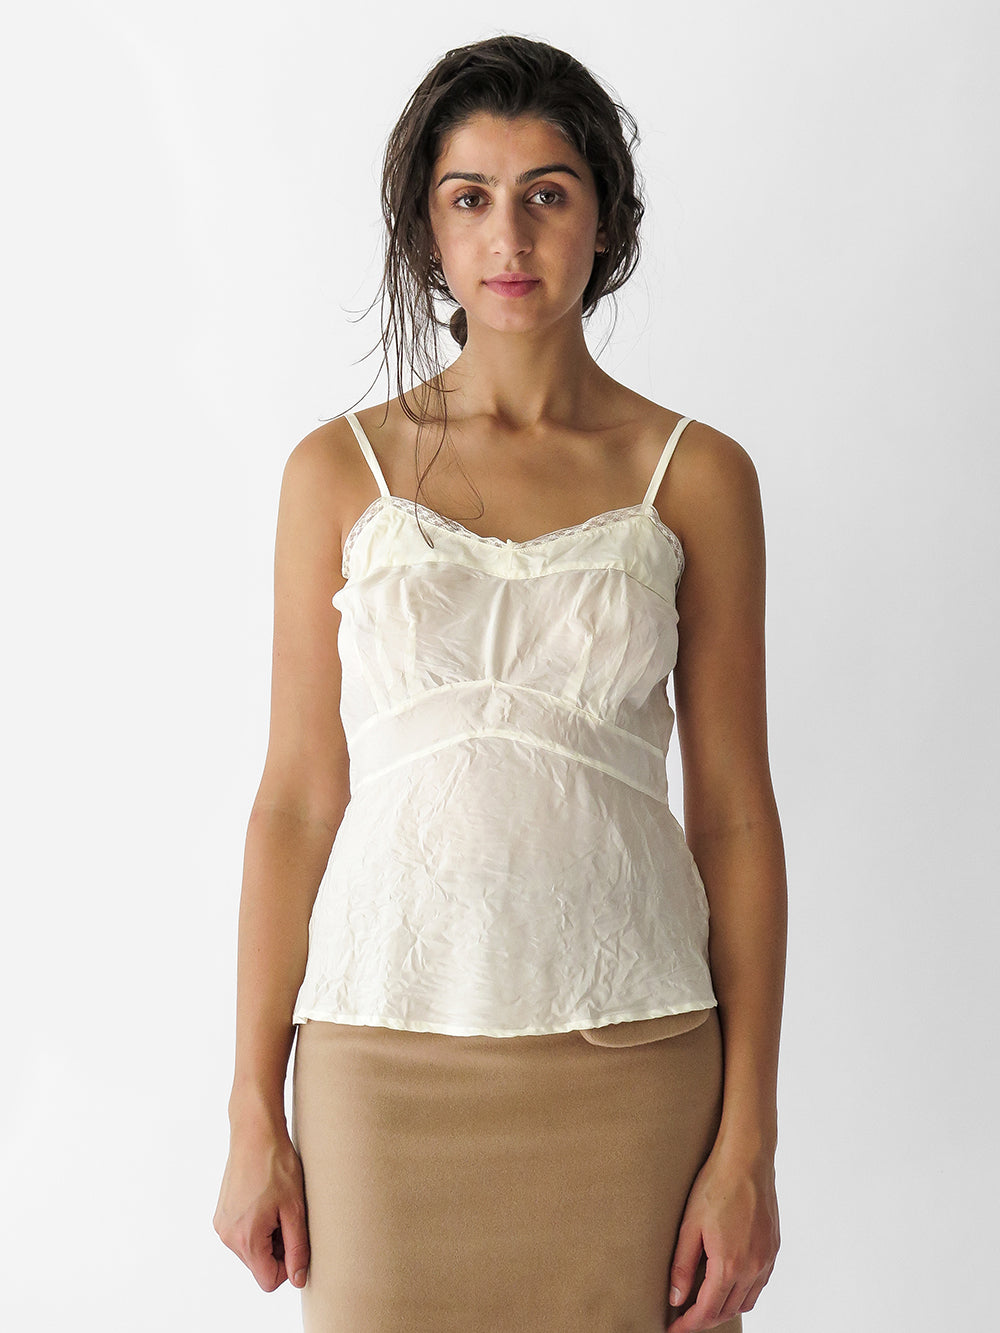 Erica Tanov's Organic Cotton Cami pj Set